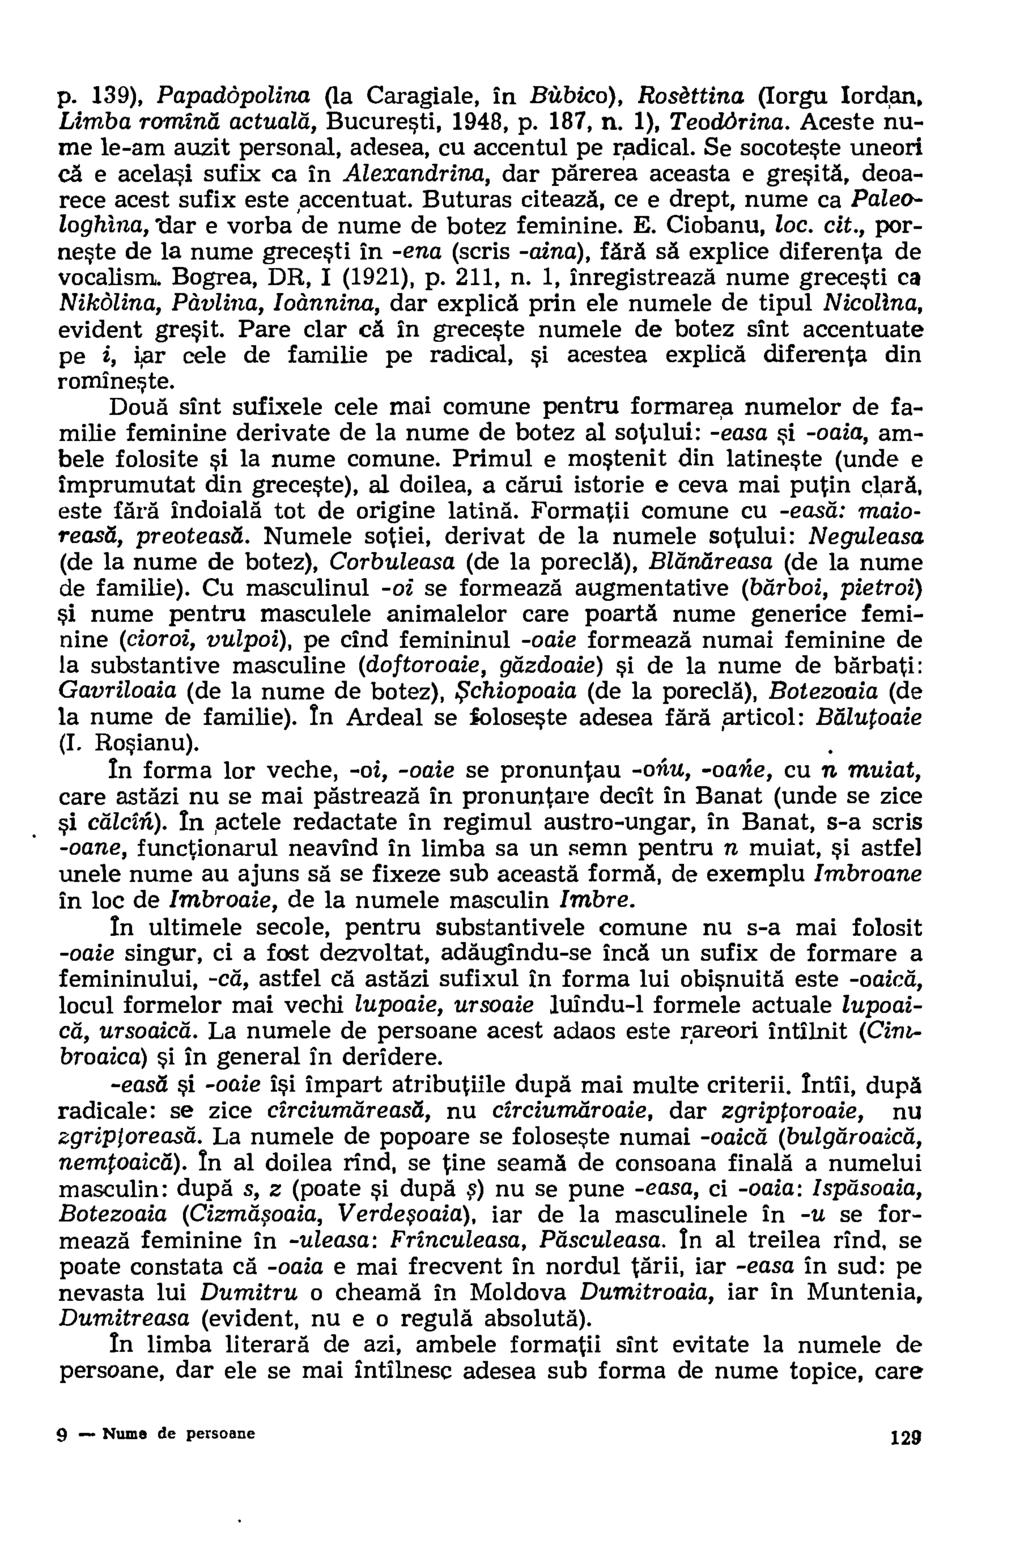 p. 139), Papaddpolina (la Caragiale, in a Ibico), Rosettina (Iorgu Iord,an, Limba romind actuald, Bucuresti, 1948, p. 187, n. 1), TeodOrina.